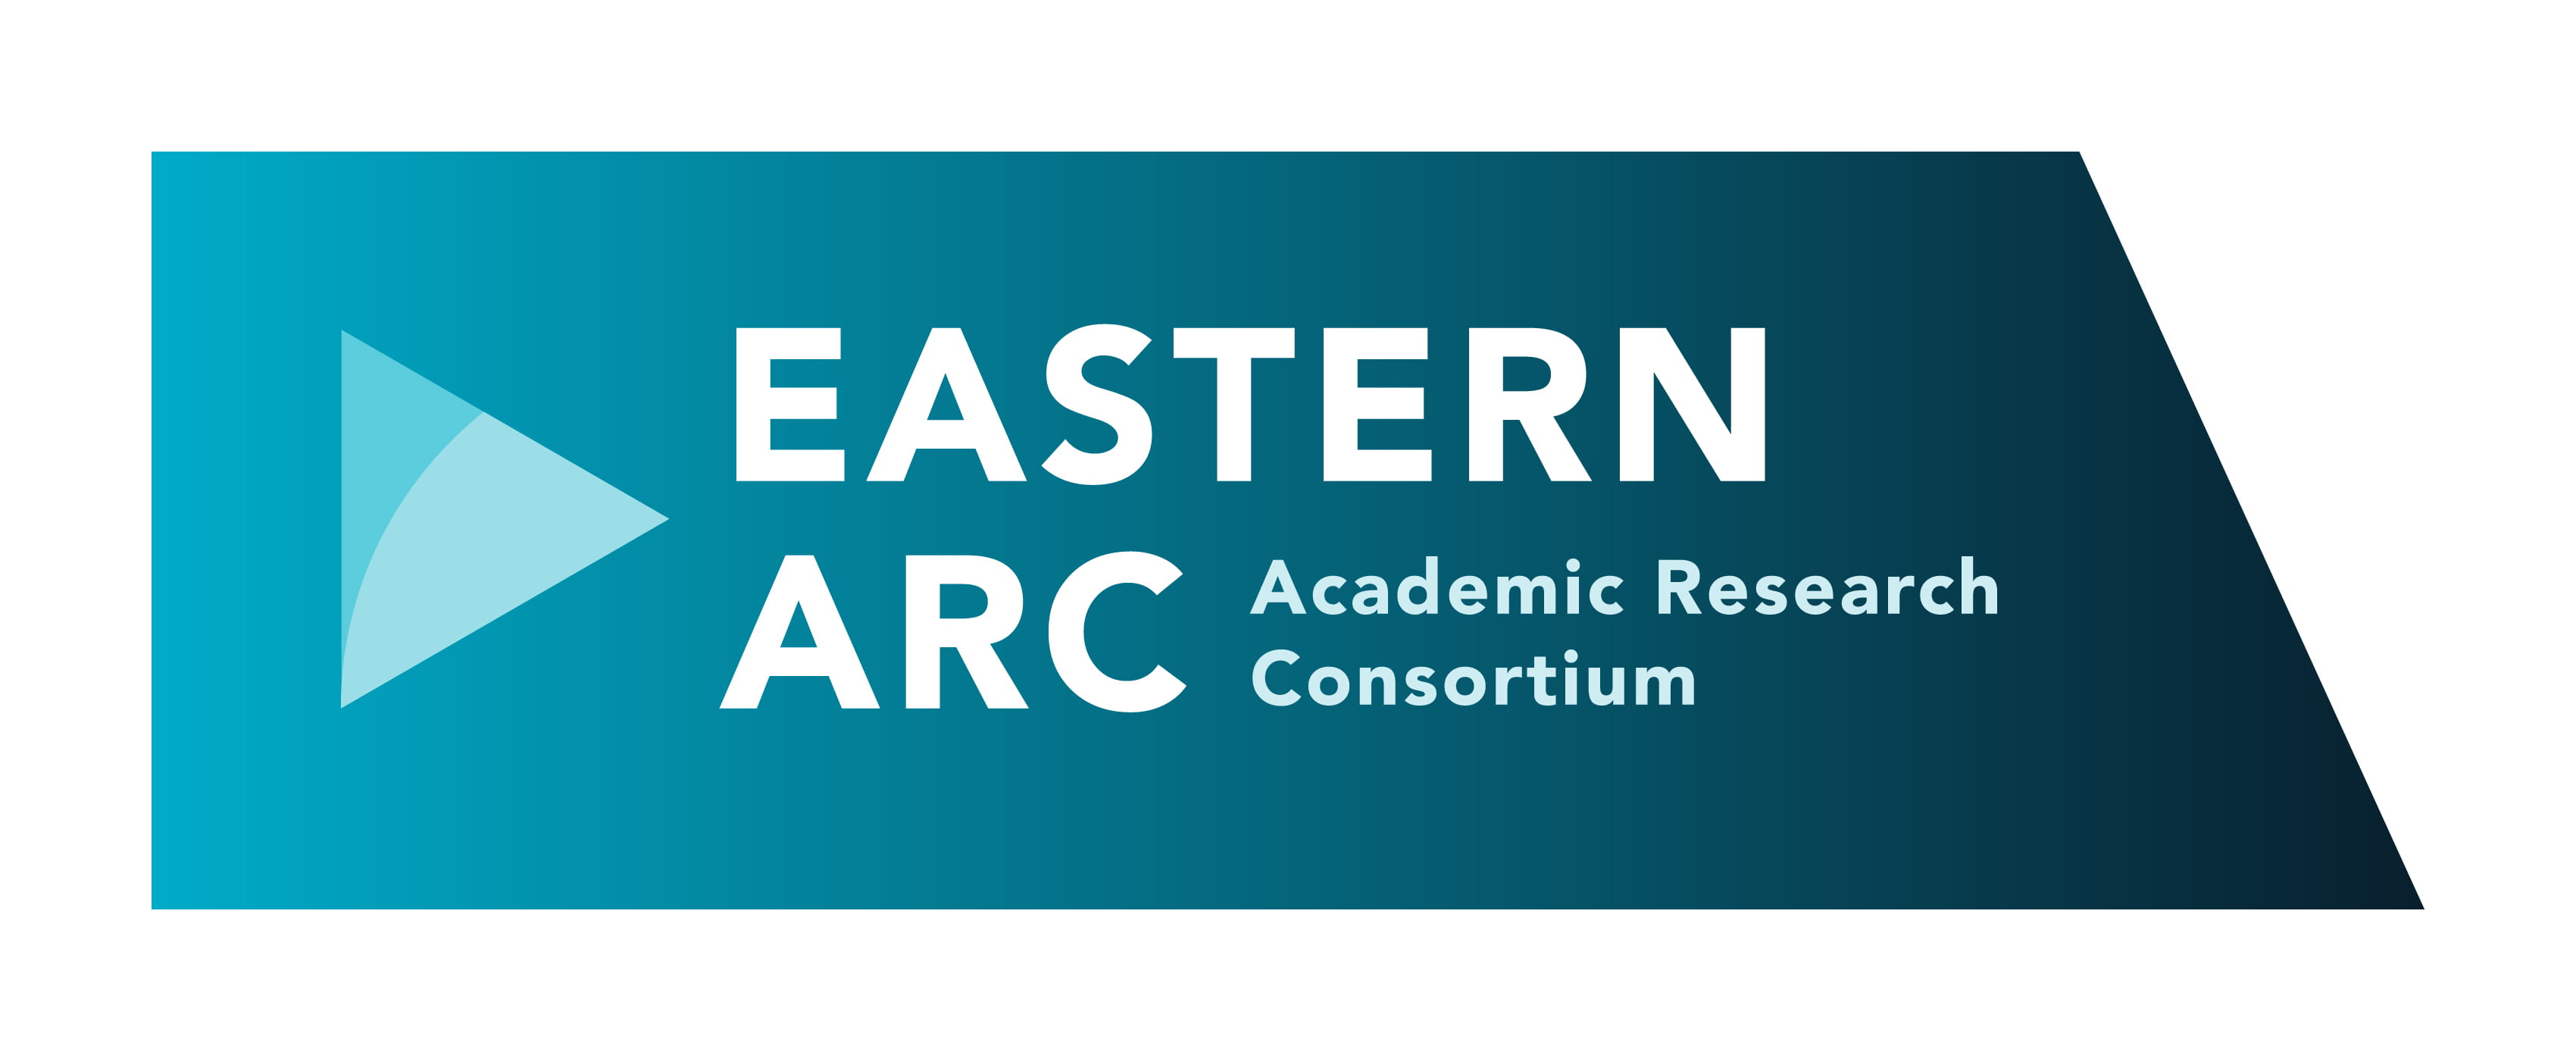 Eastern Arc Academic Research Consortium logo